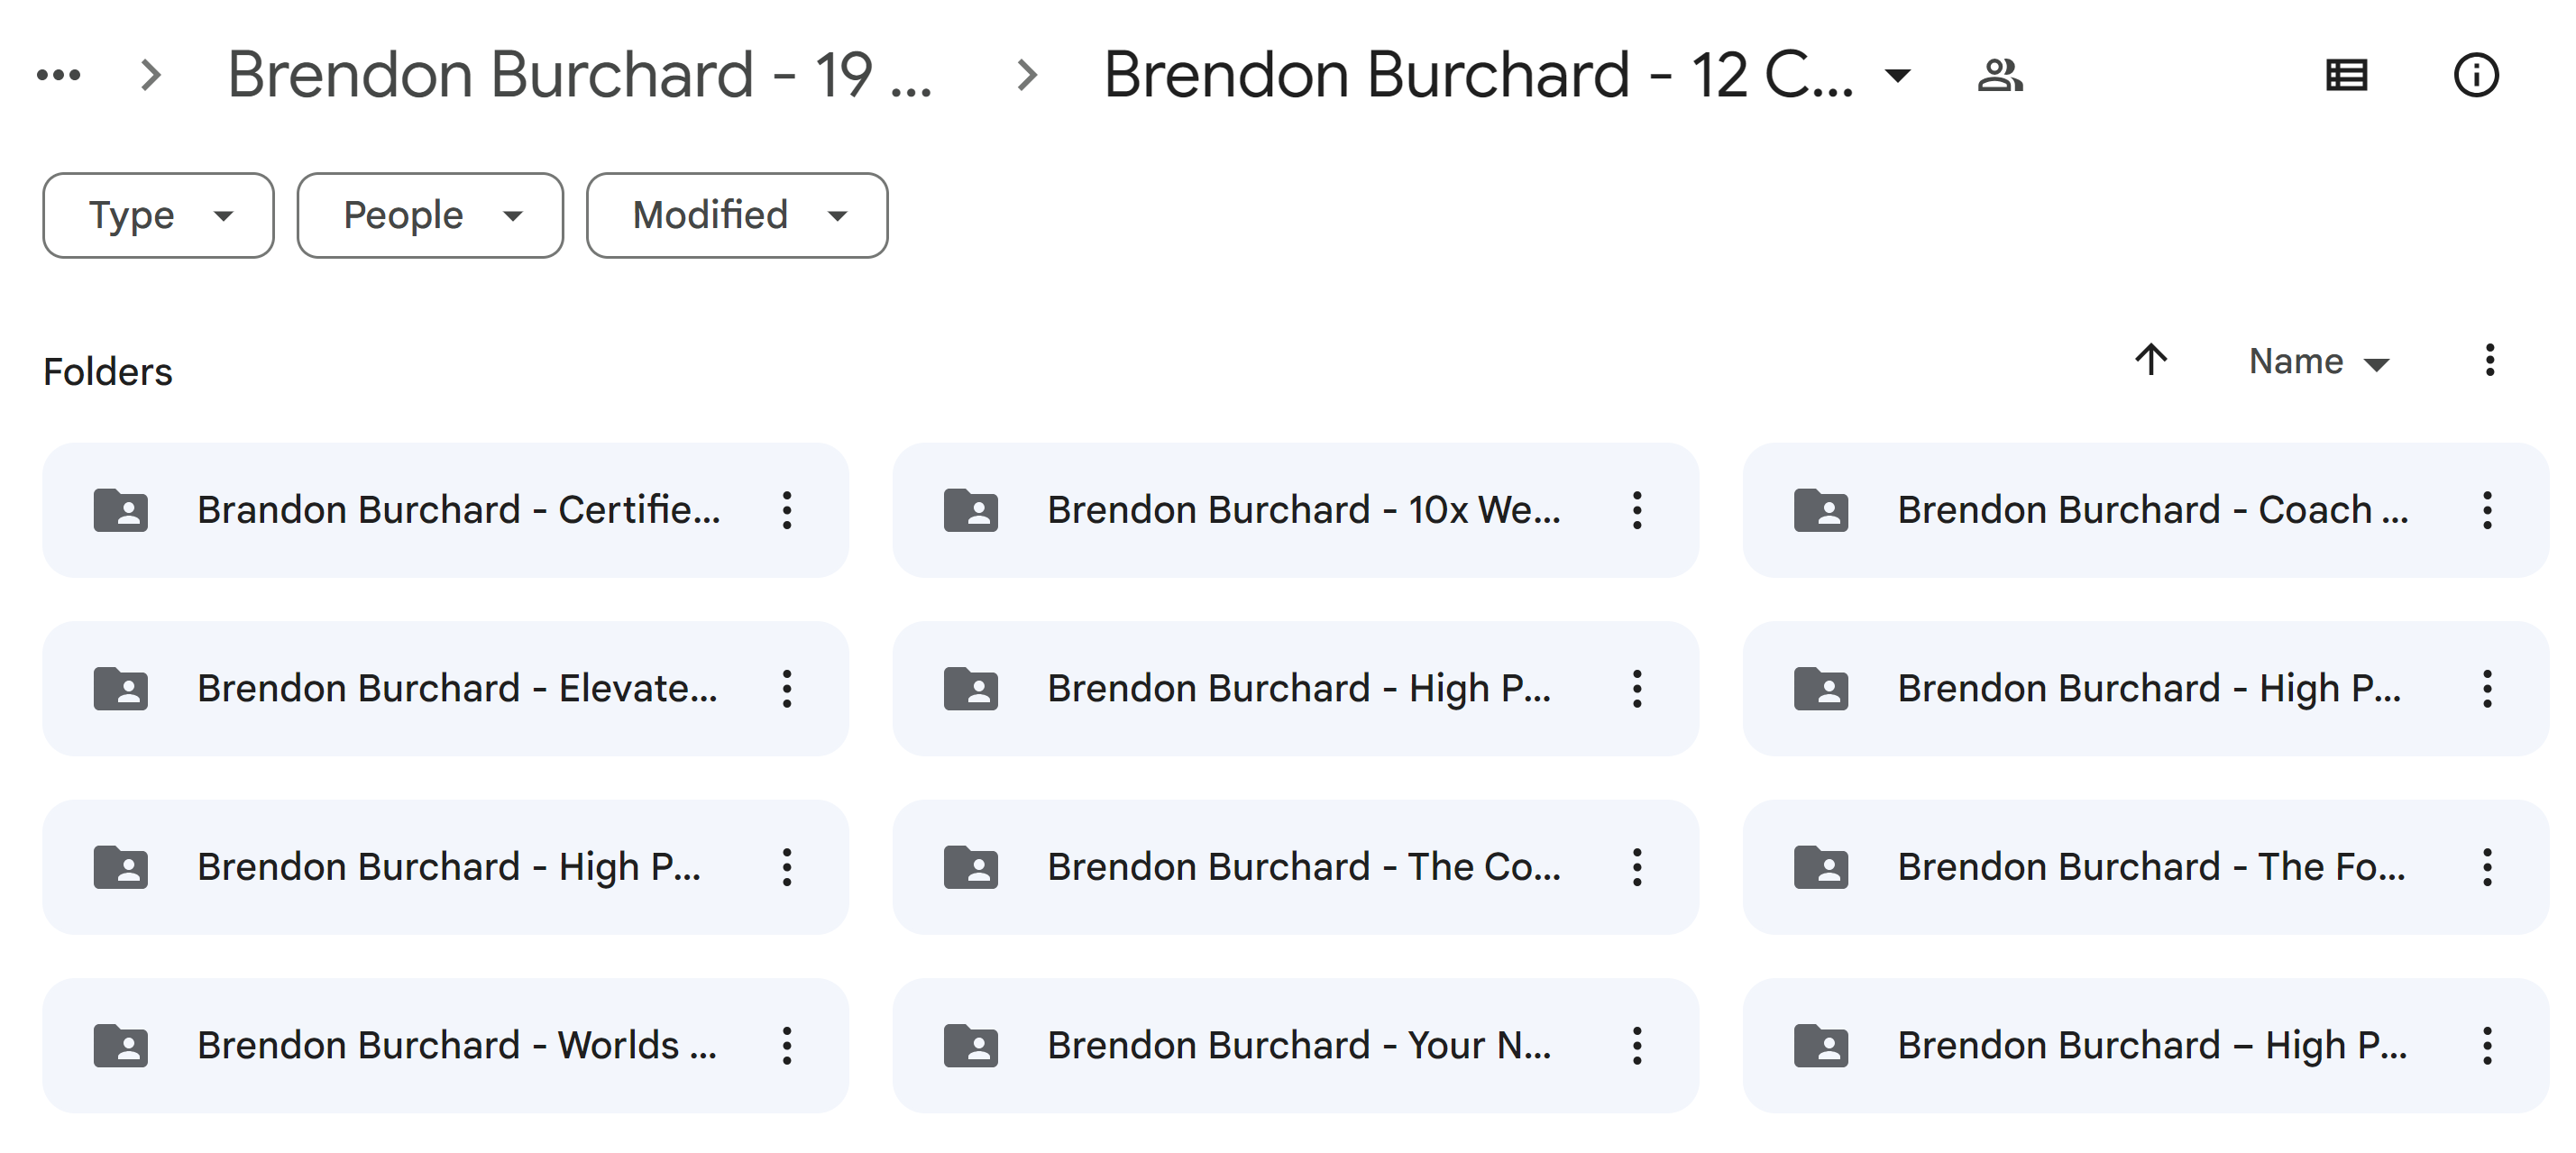 Top 19 Brendon Burchard Courses